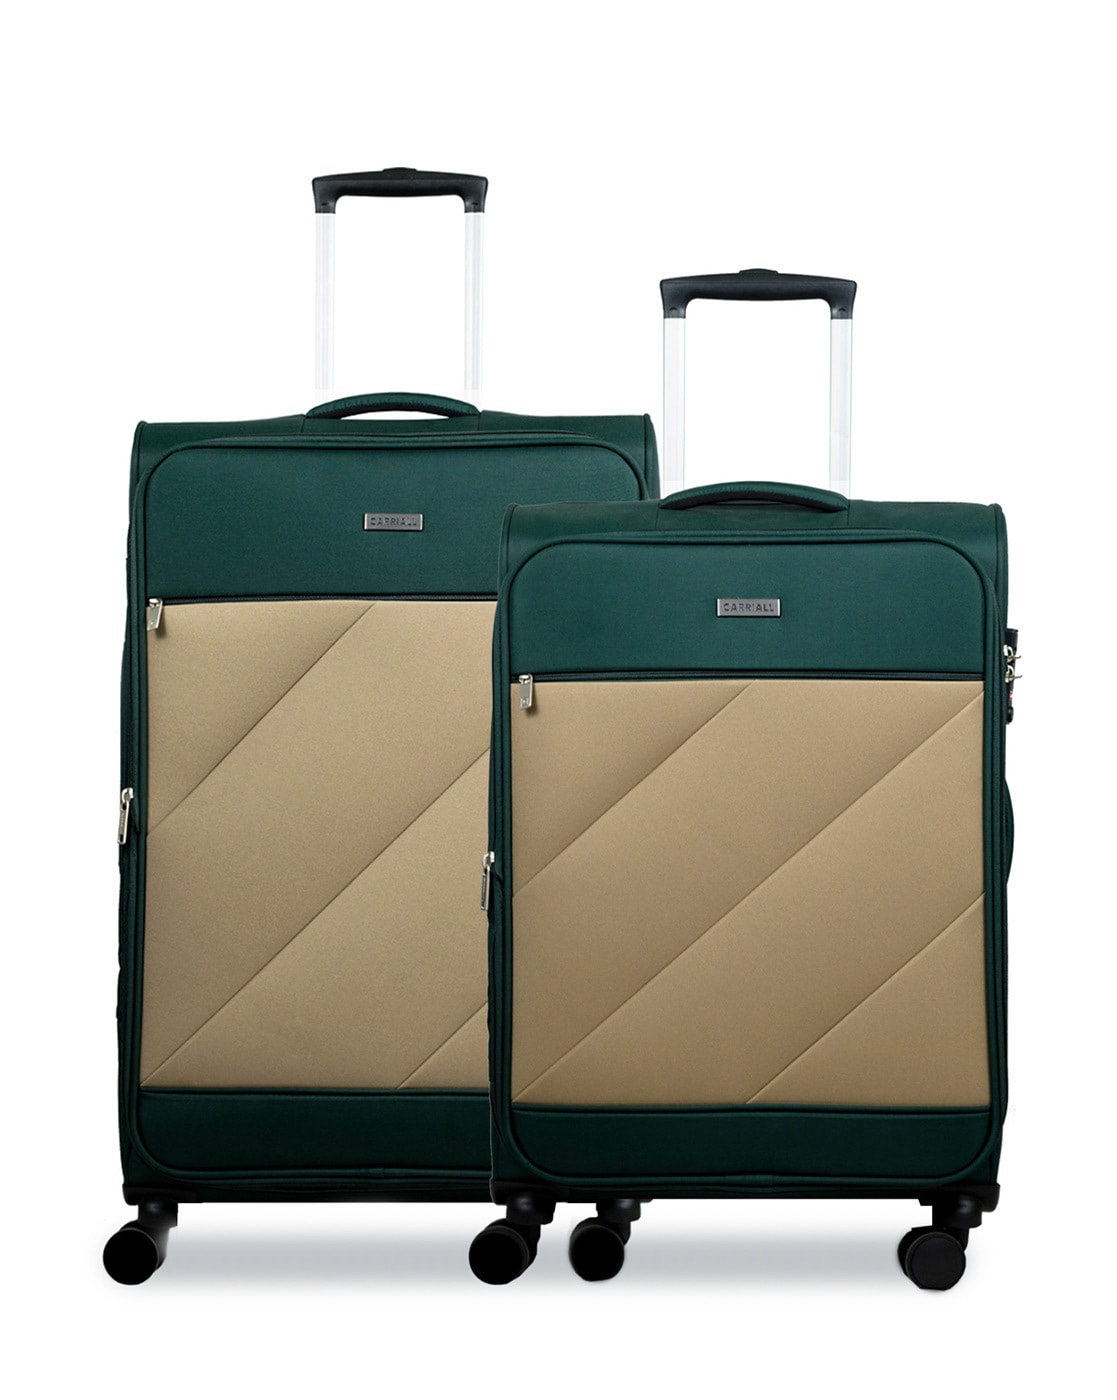 Sleek Luggage | Trolley luggage | Cabin + Check-in luggage